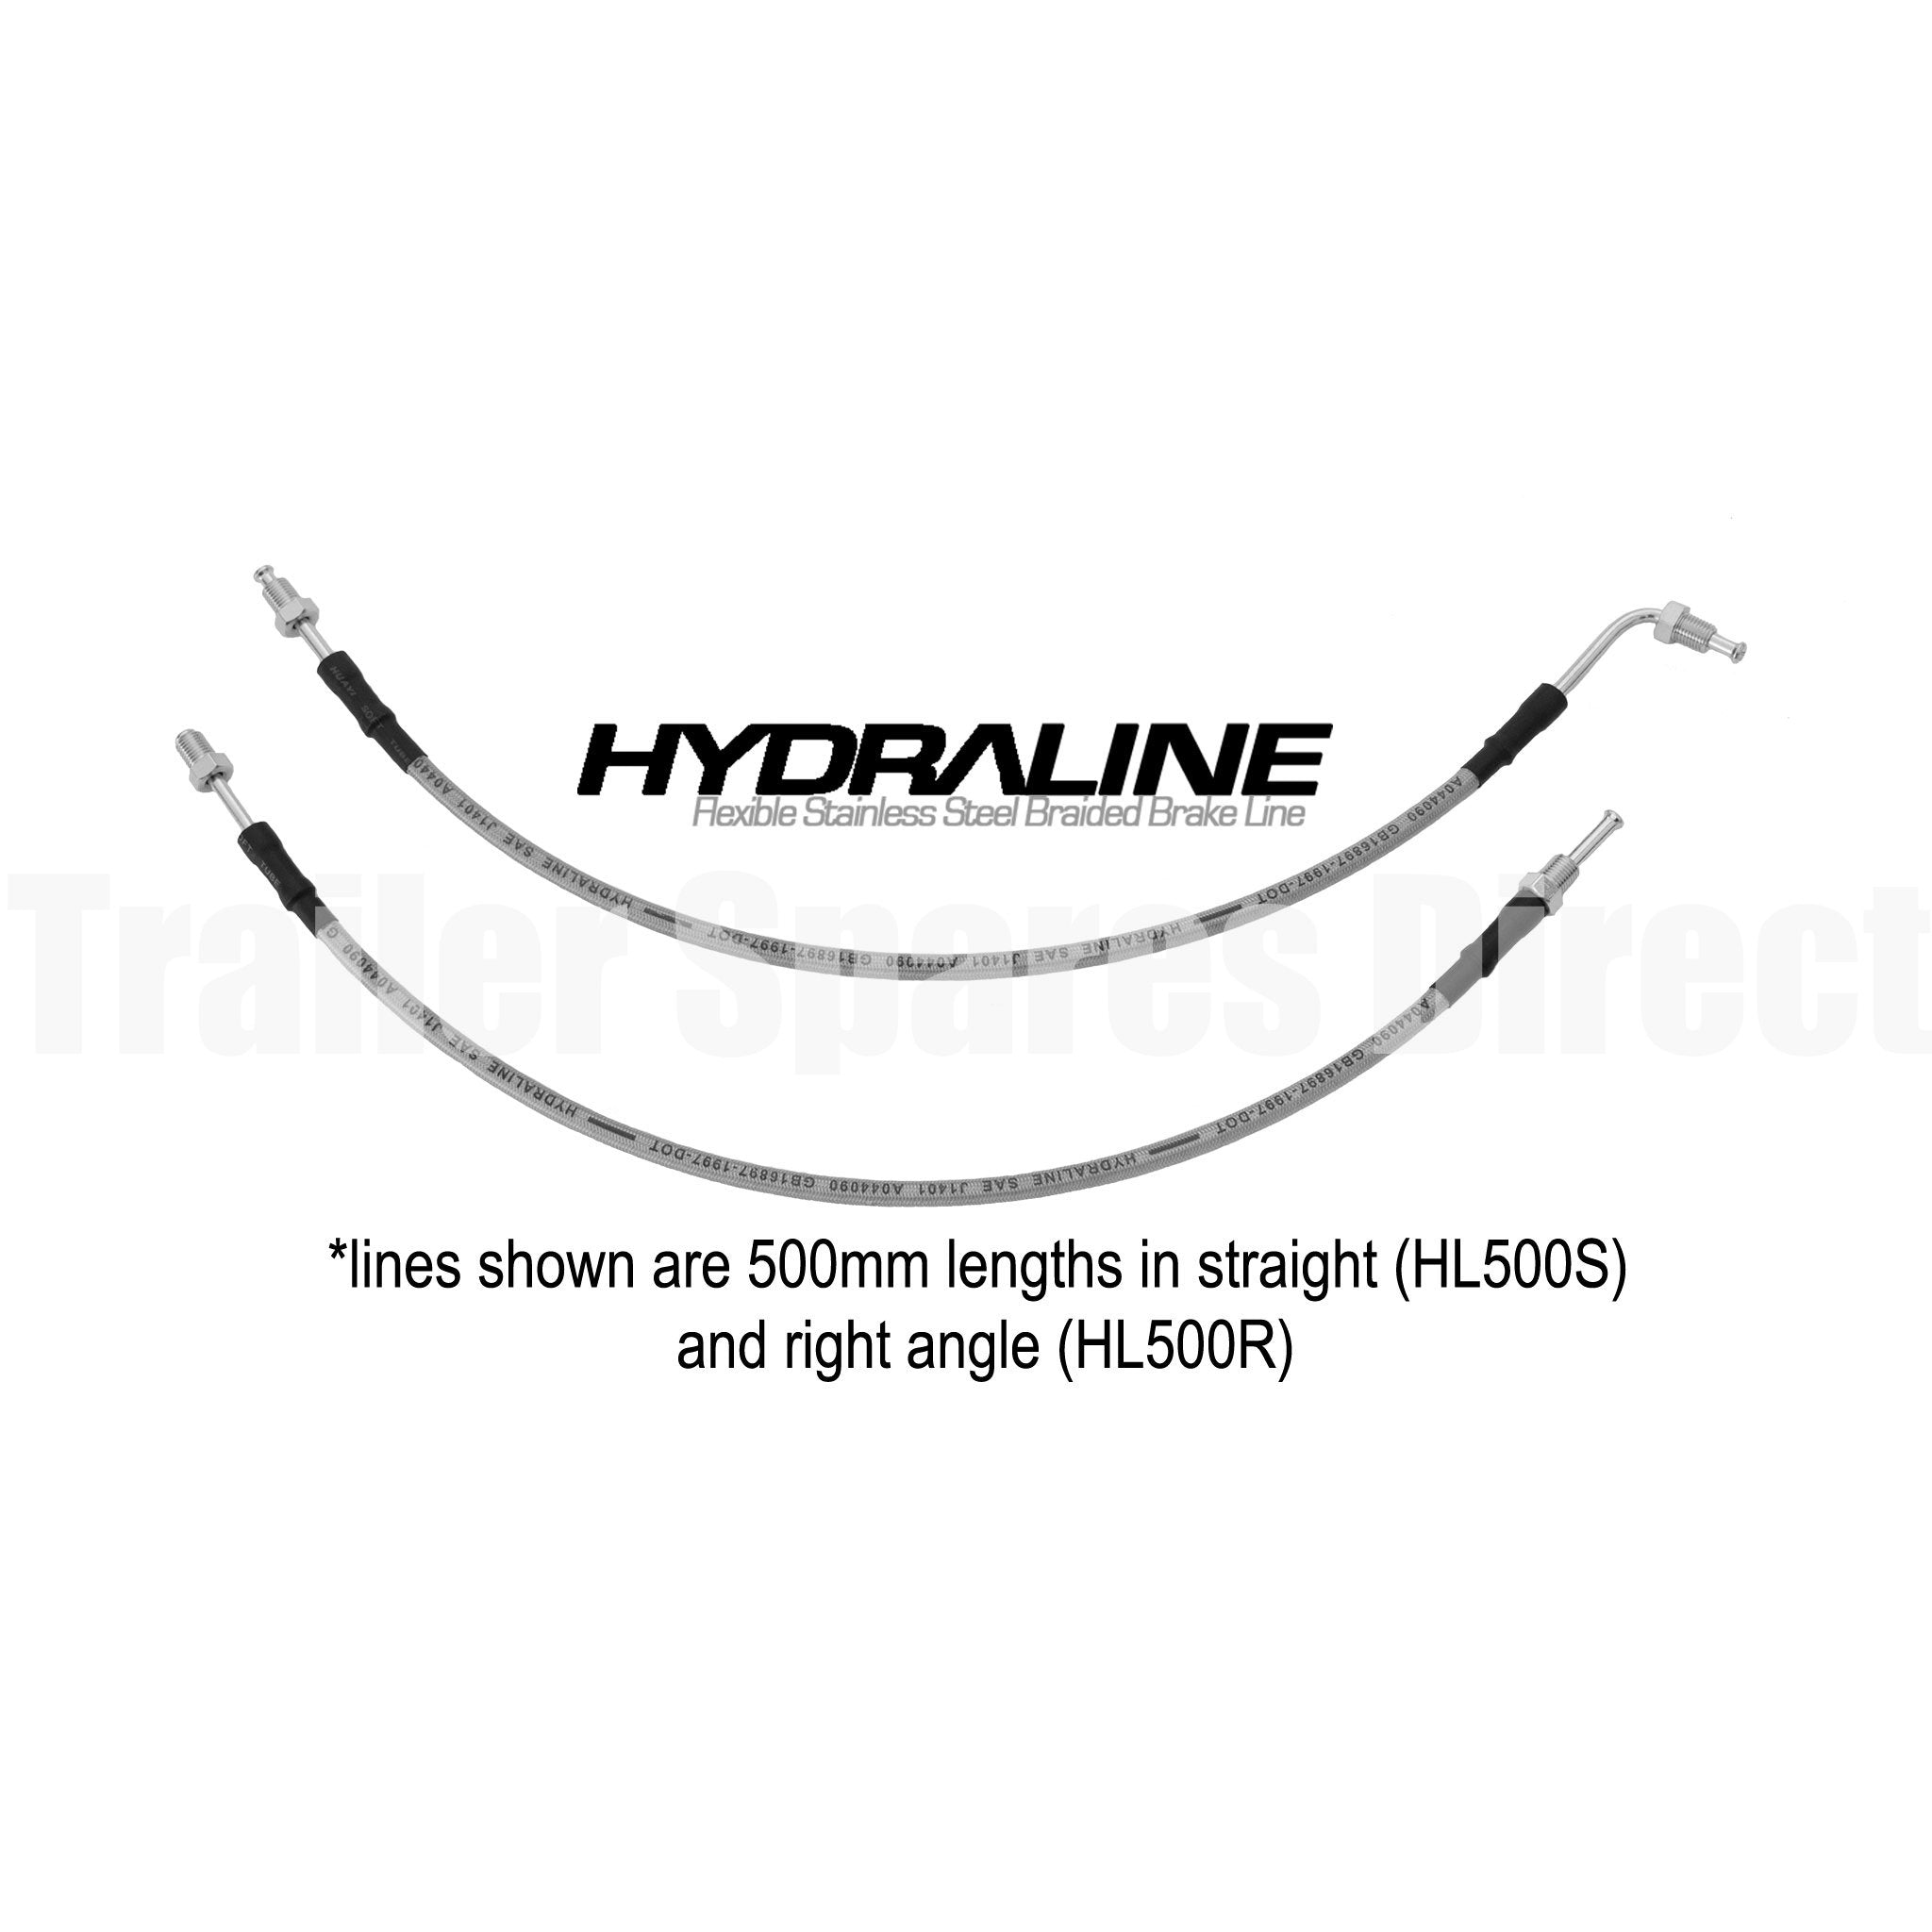 8500mm HydraLine brake hose